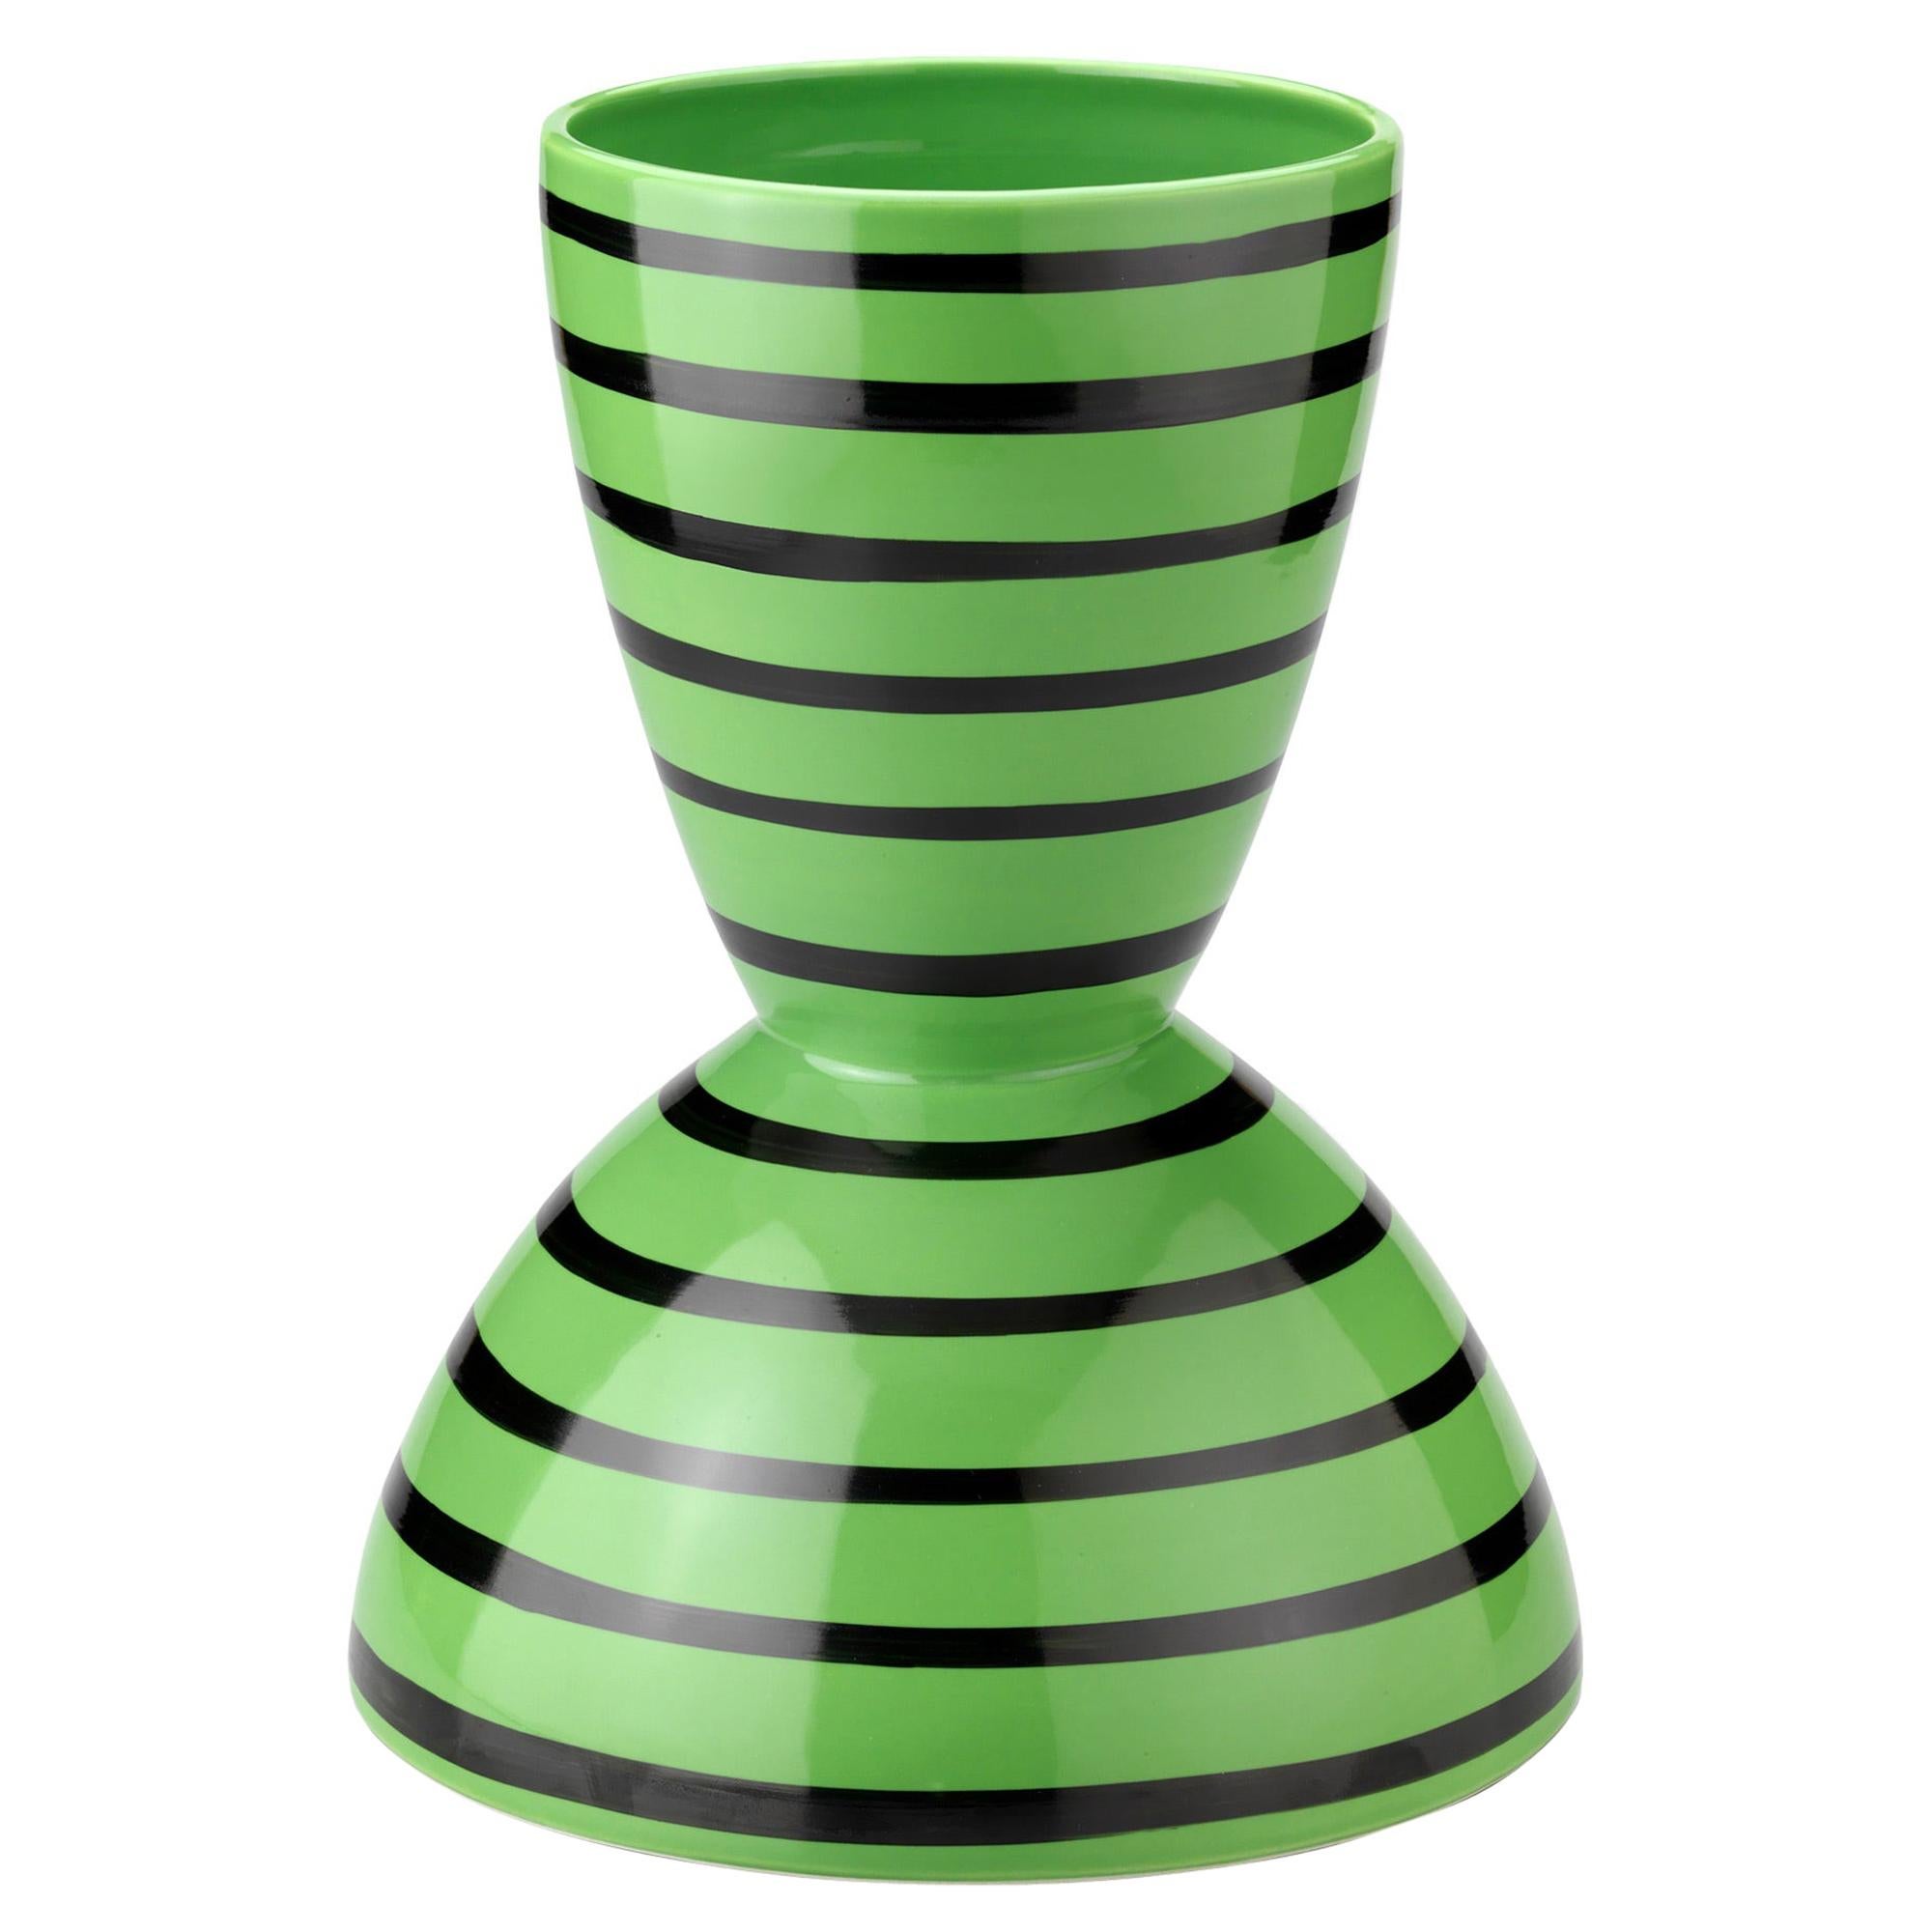 Vegas Ceramic Vase by Roger Selden for Post Design Collection/Memphis